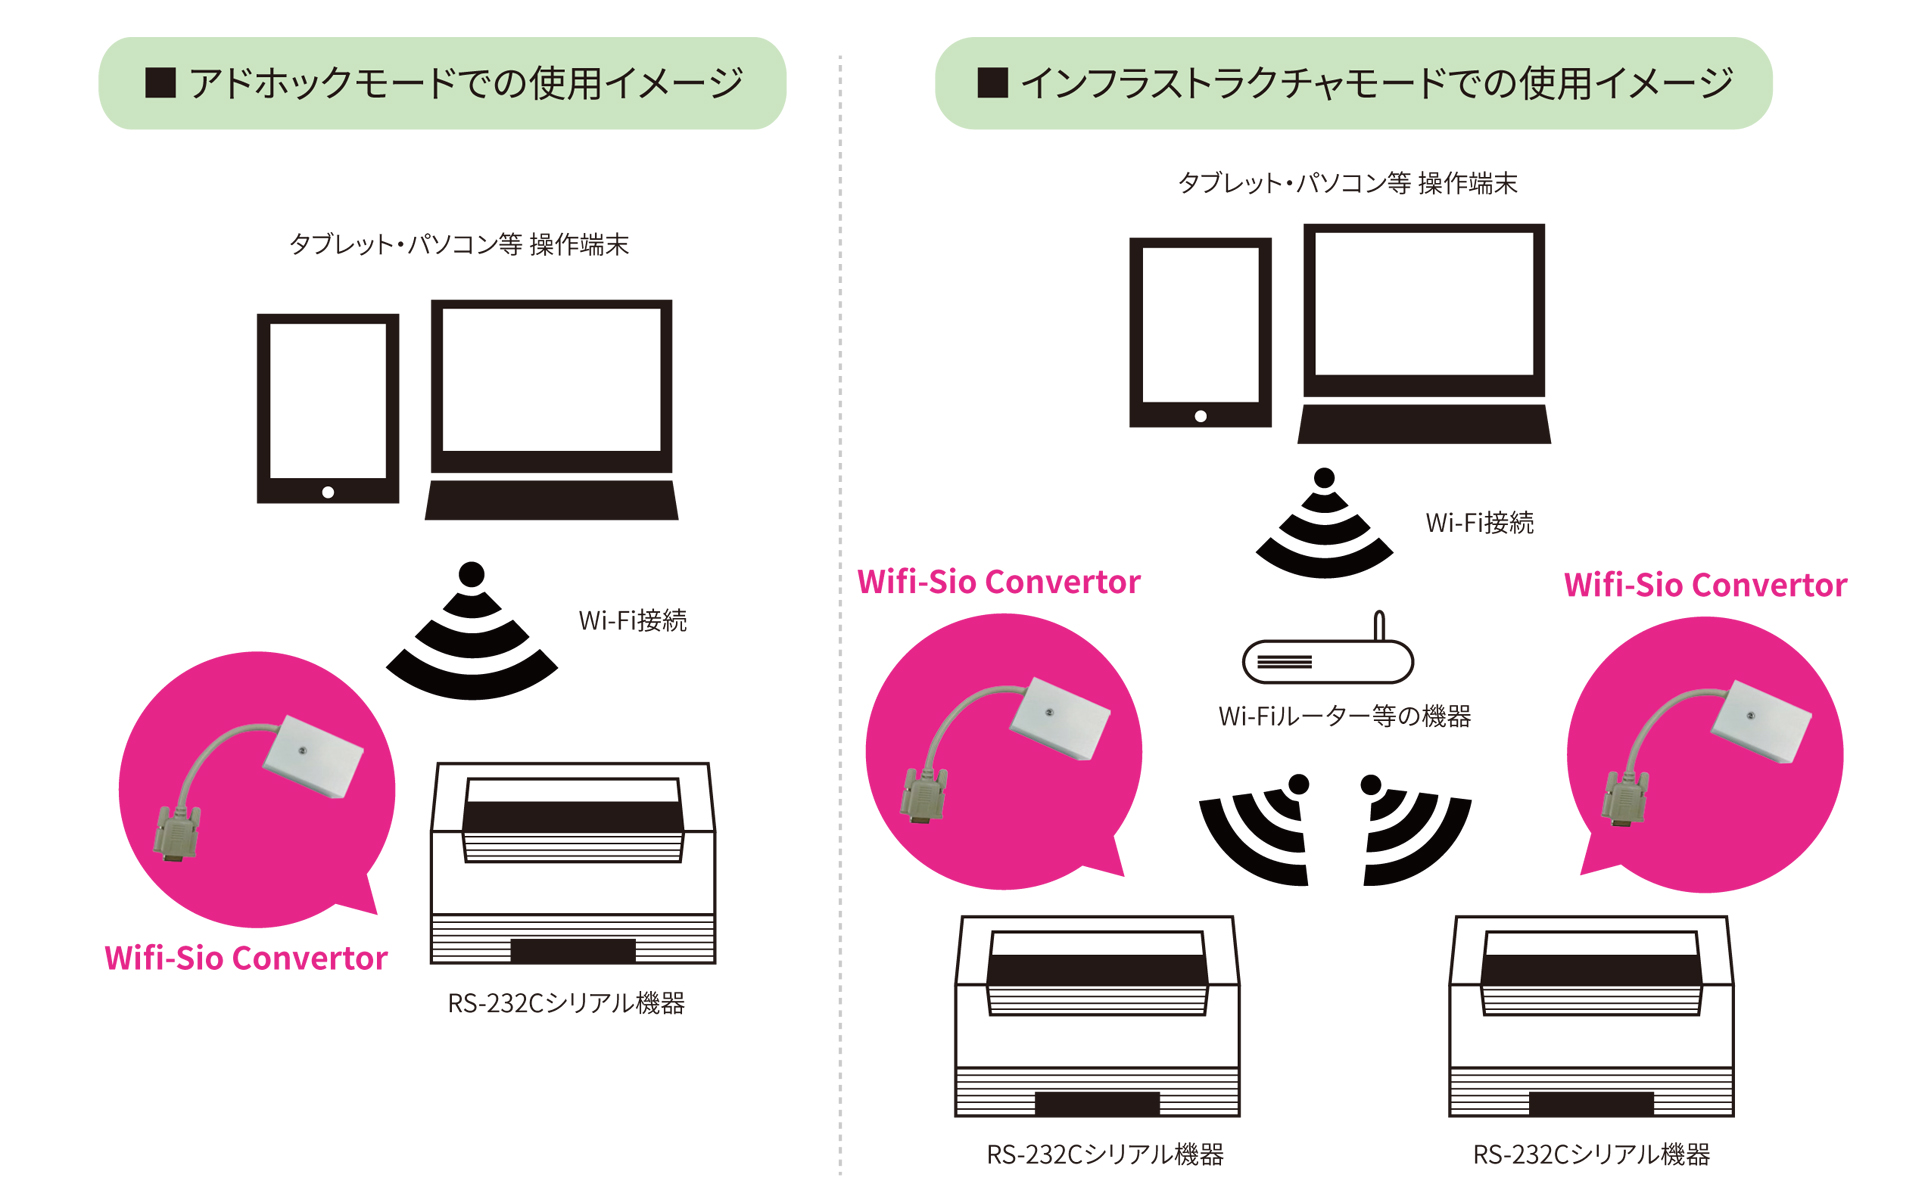 Wifi-Sio Convertor使用イメージ